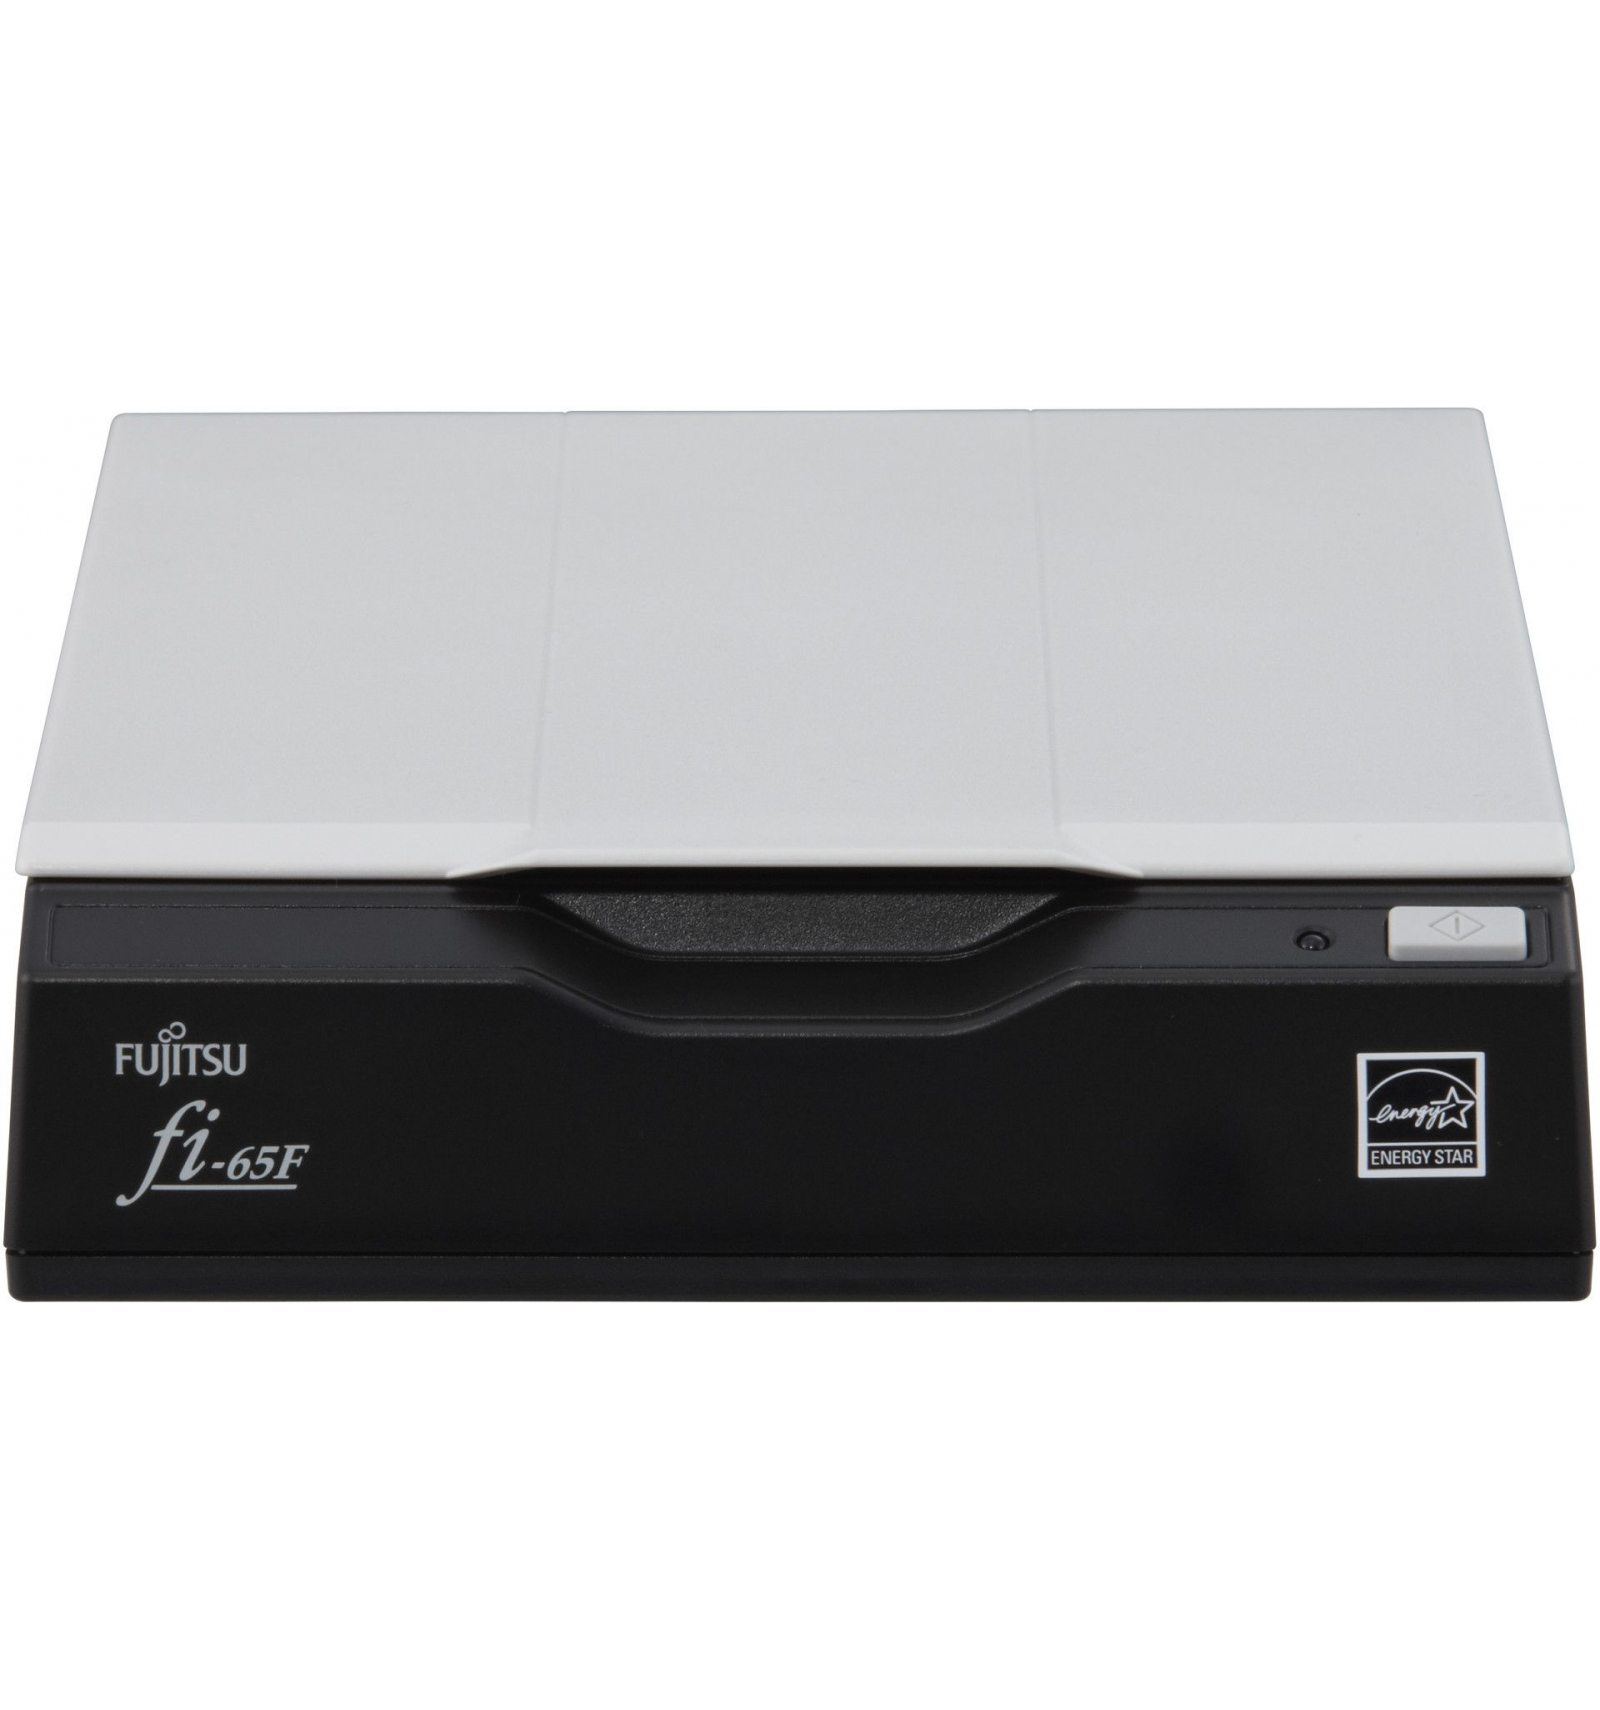 Máy Scan Fujitsu fi-65F, PA03595-B001